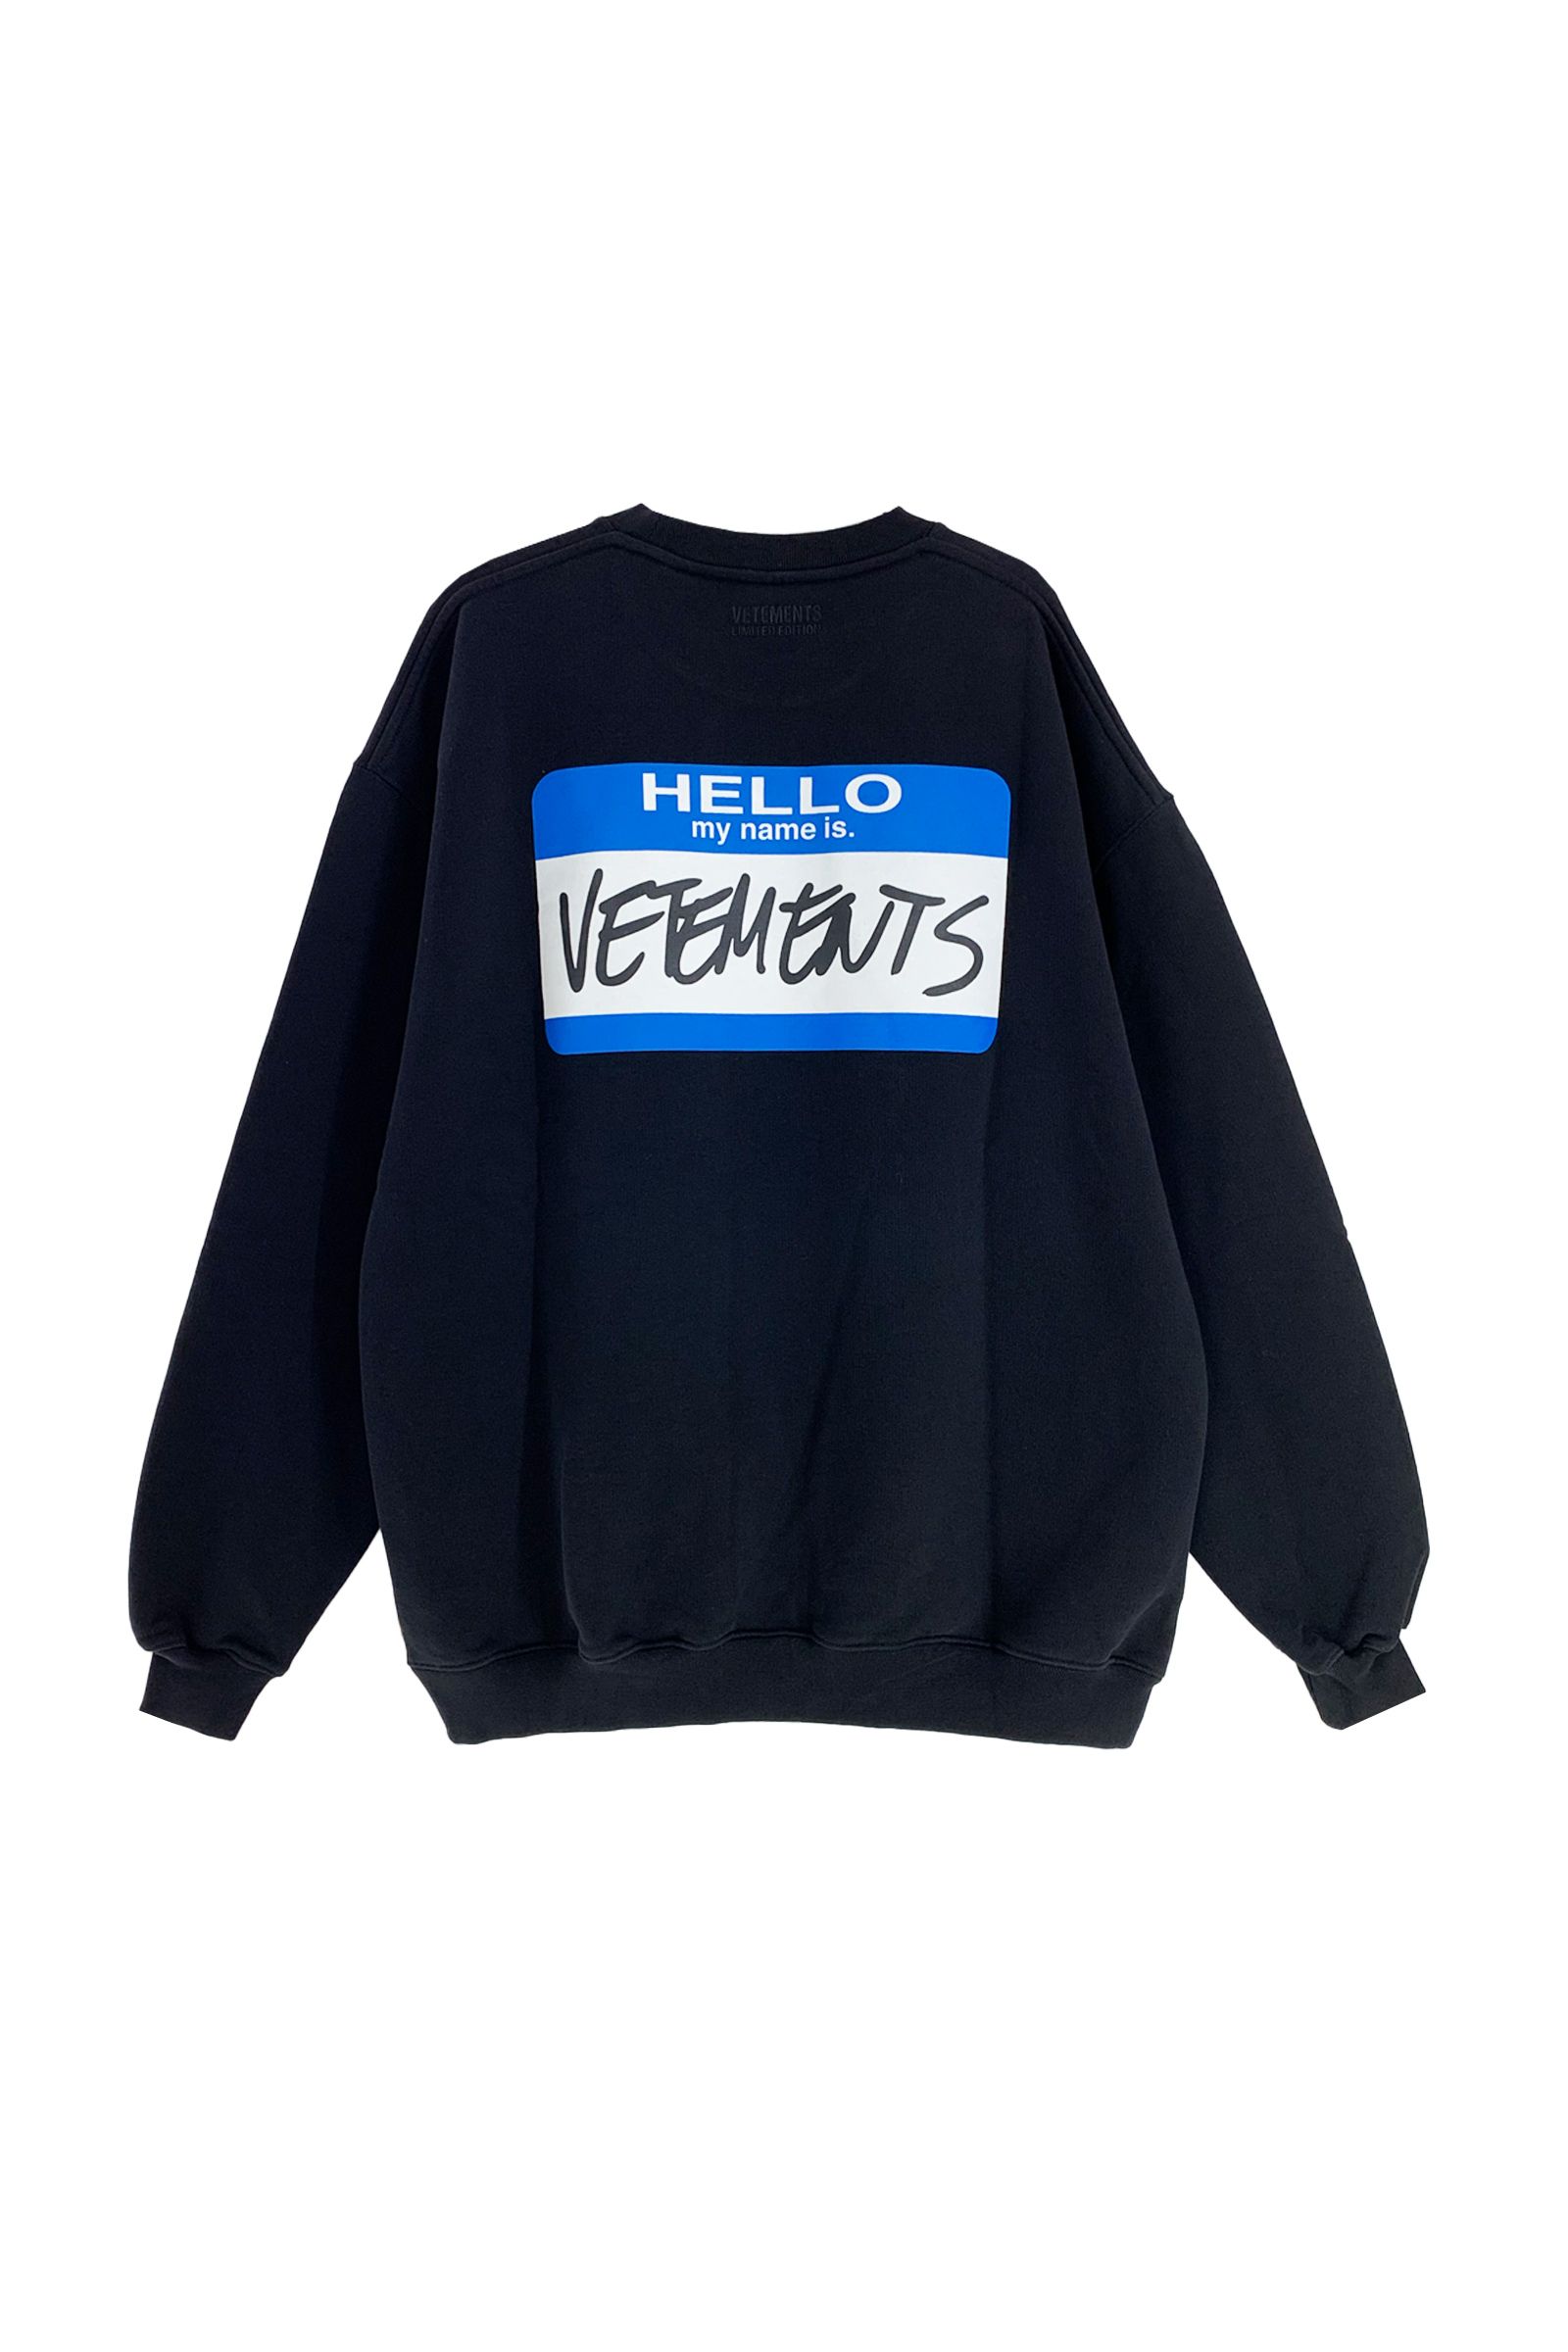 My Name Is VETEMENTS Sweatshirt - XS